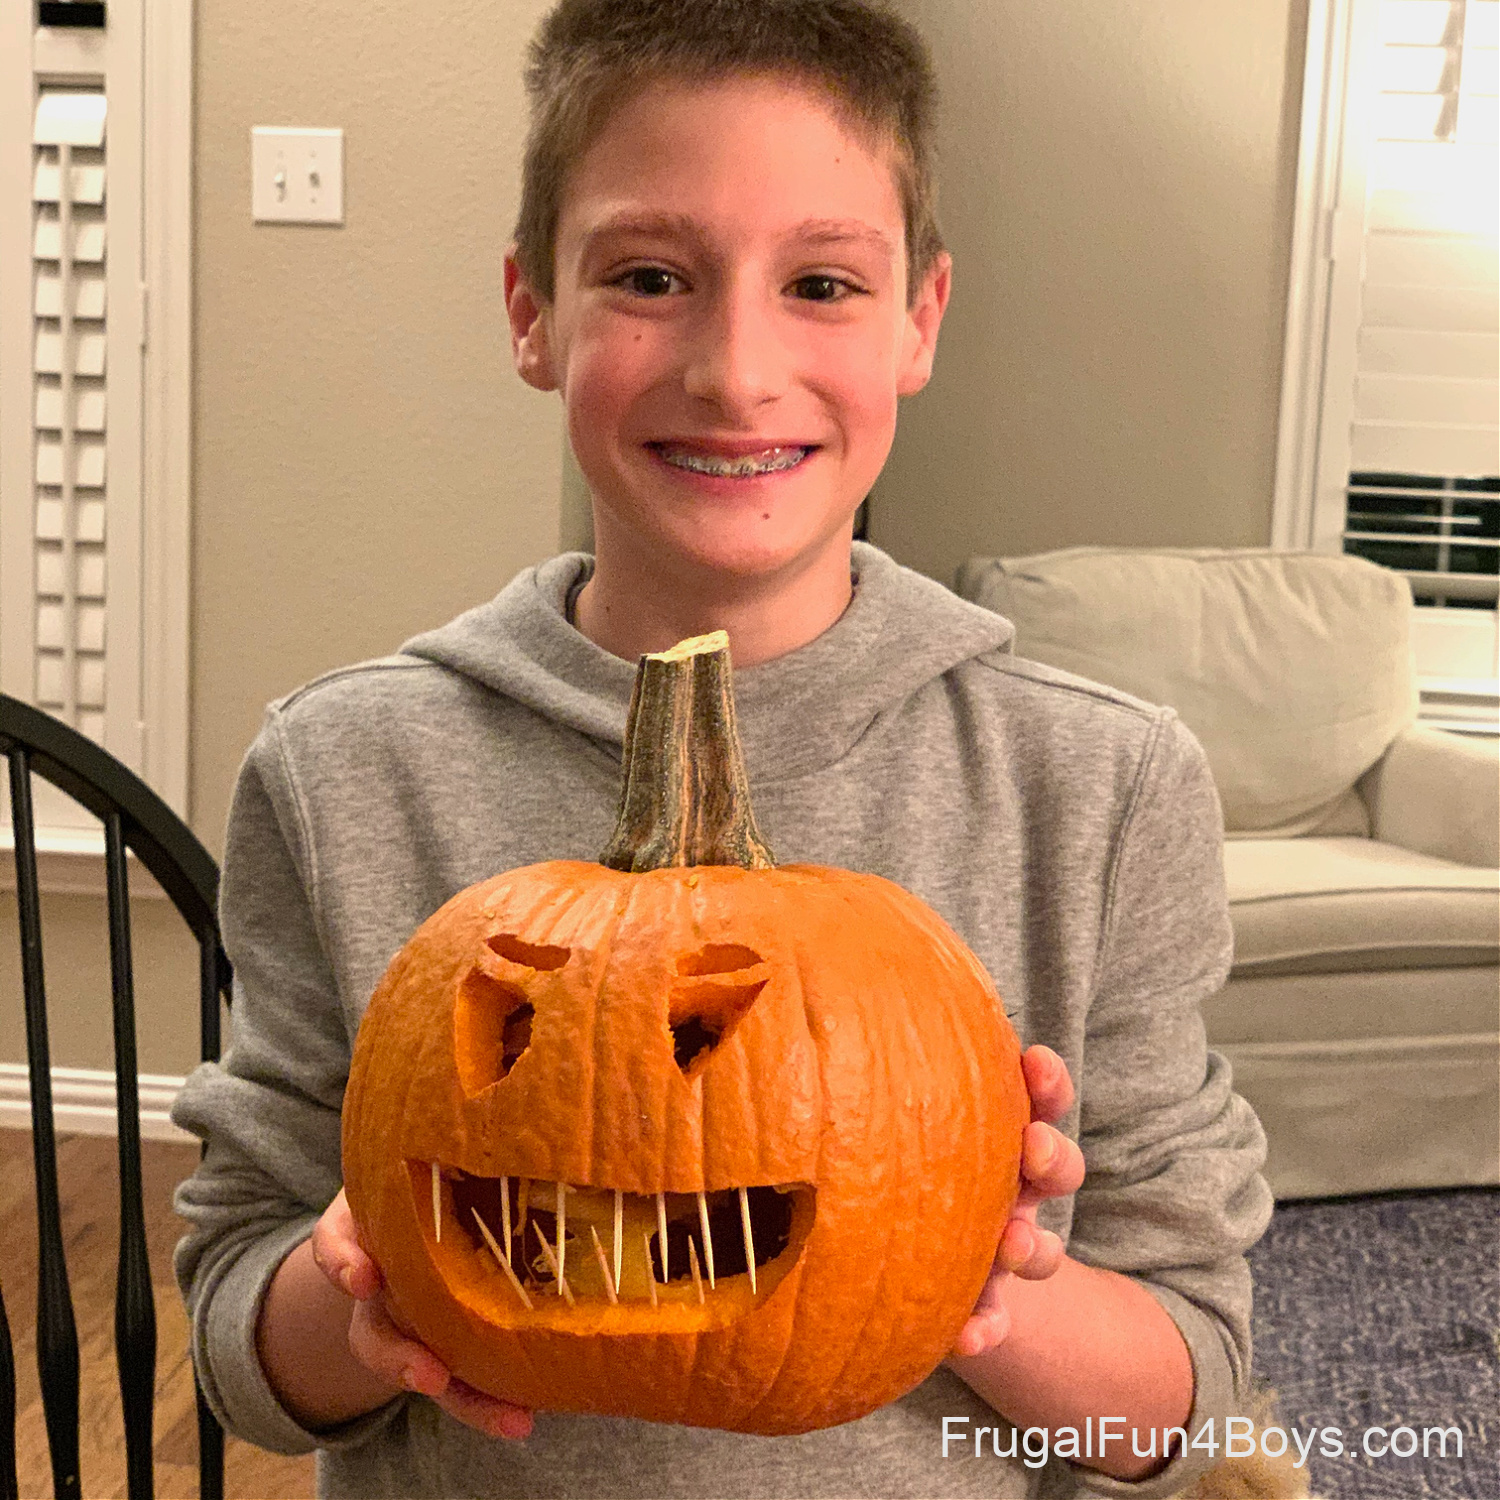 Halloween jokes - a child holding a carved pumpkin